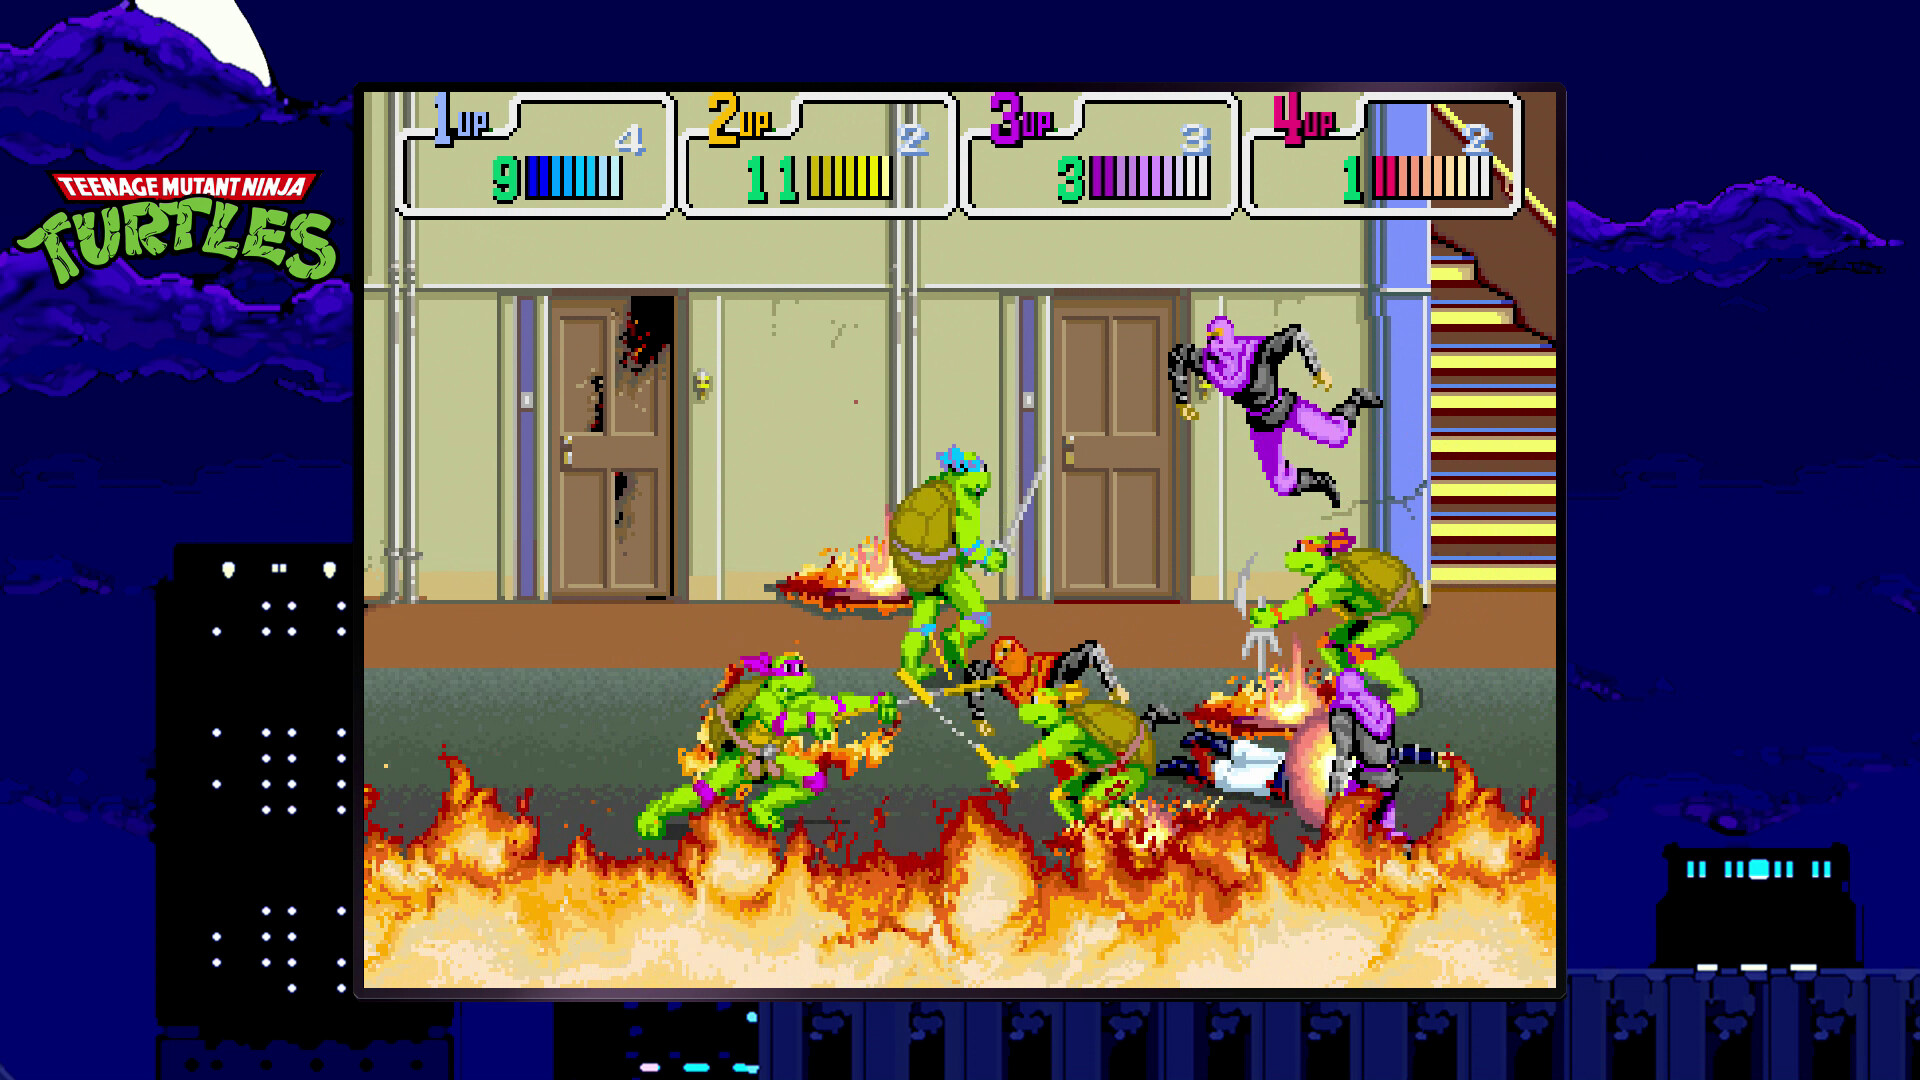 O jogo de arcade Teenage Mutant Ninja Turtles de 1989 emulado em Teenage Mutant Ninja Turtles: The Cowabunga Collection.